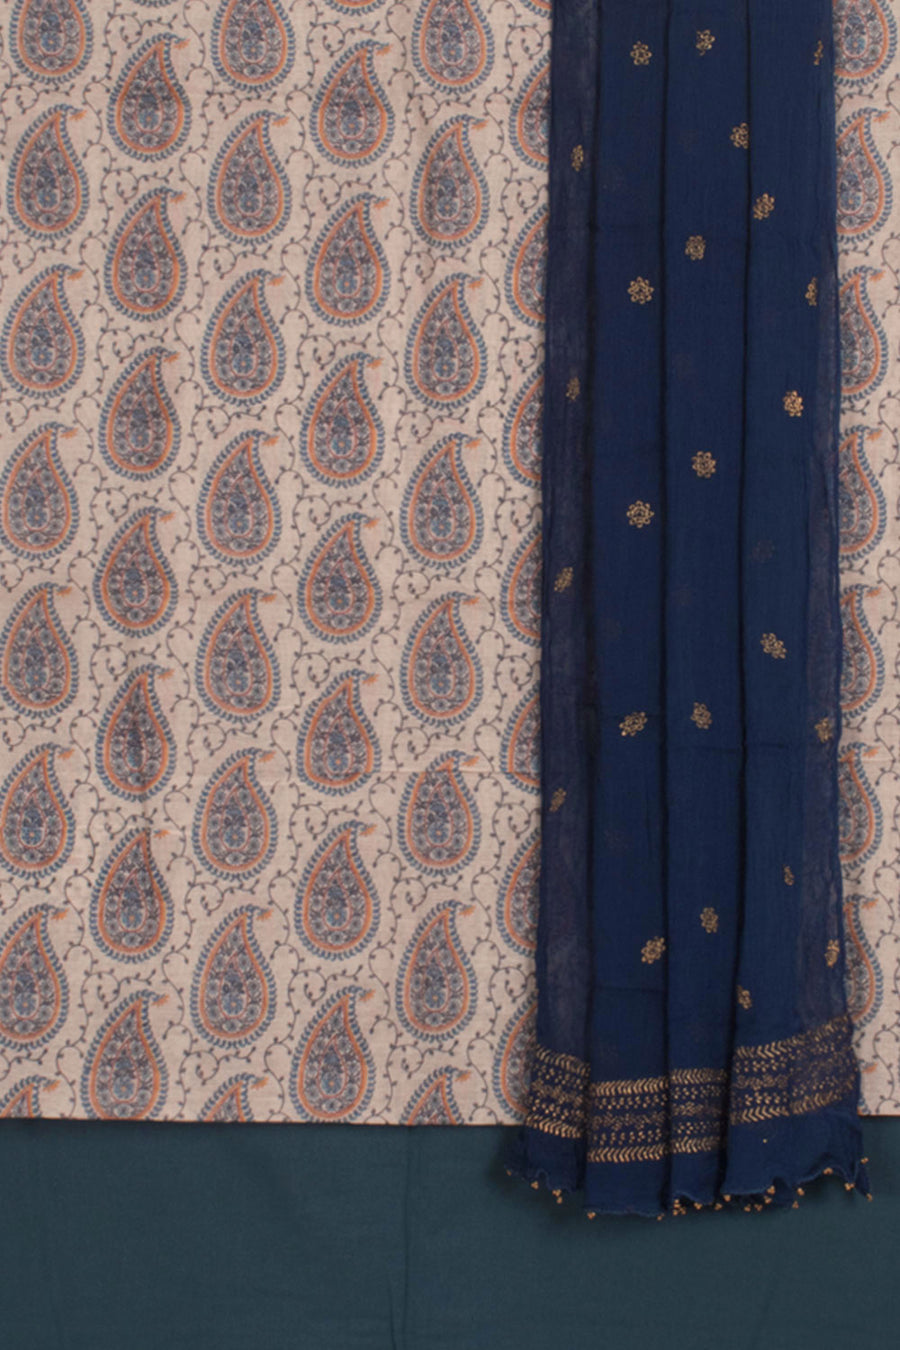 Digital Printed Chanderi Silk Cotton 3-Piece Salwar Suit Material with Mulmul Bottom and Rogan Printed Dupatta